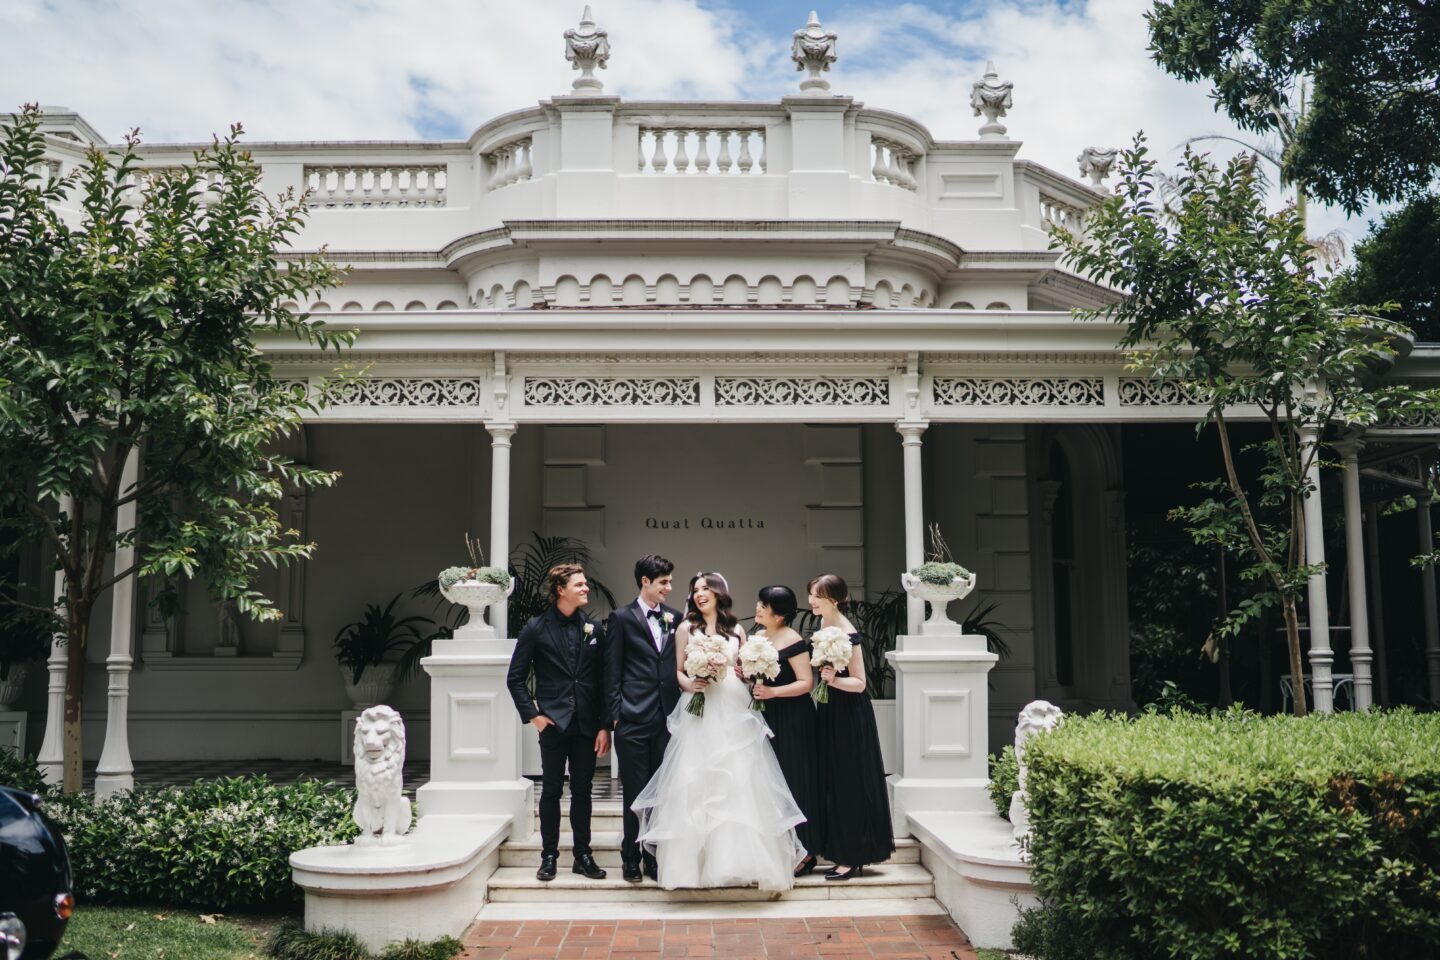  Australian Destination Wedding With Monochrome Styling